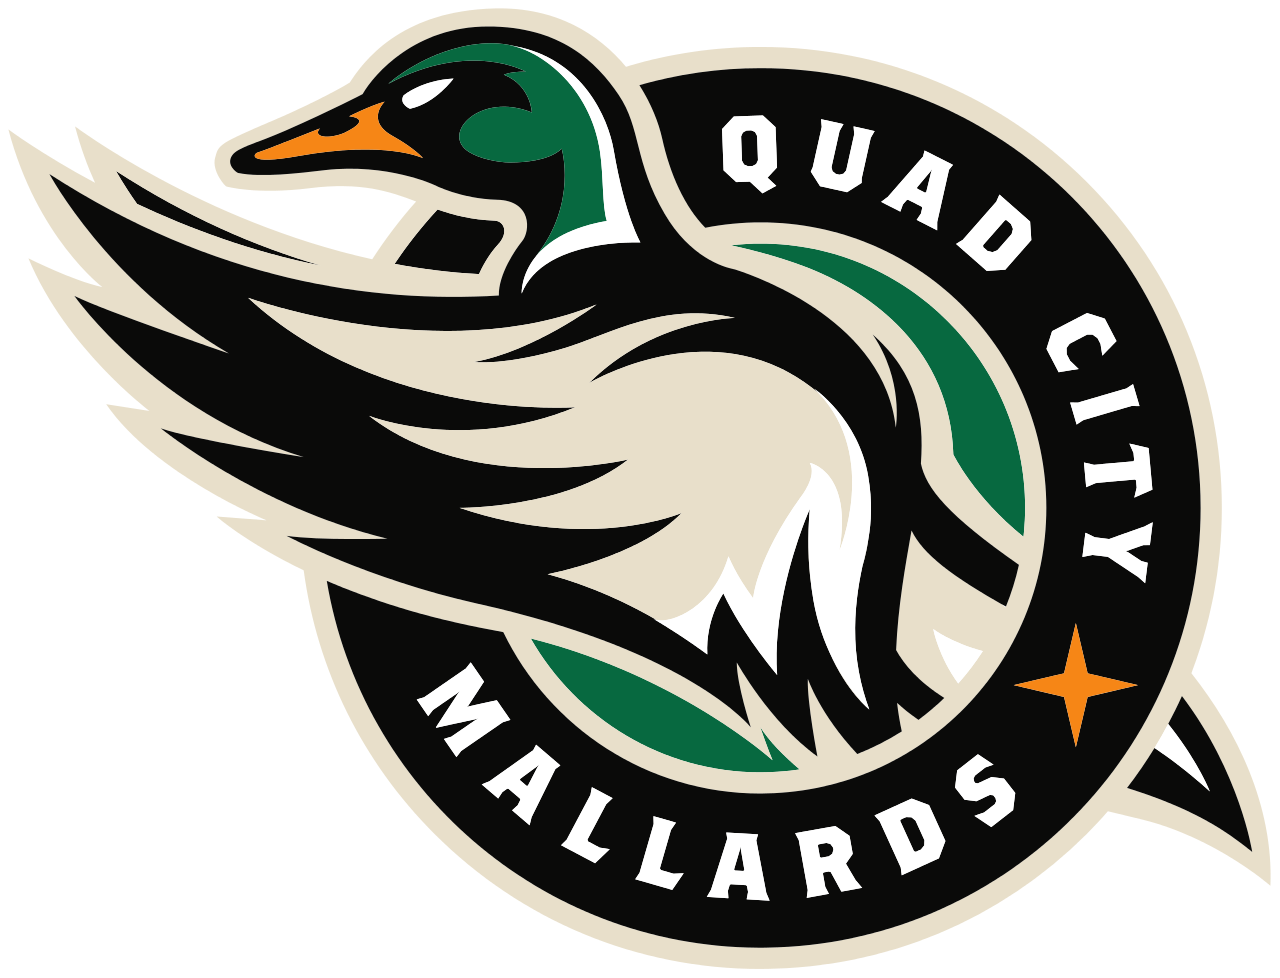 Quad City Mallards Logo